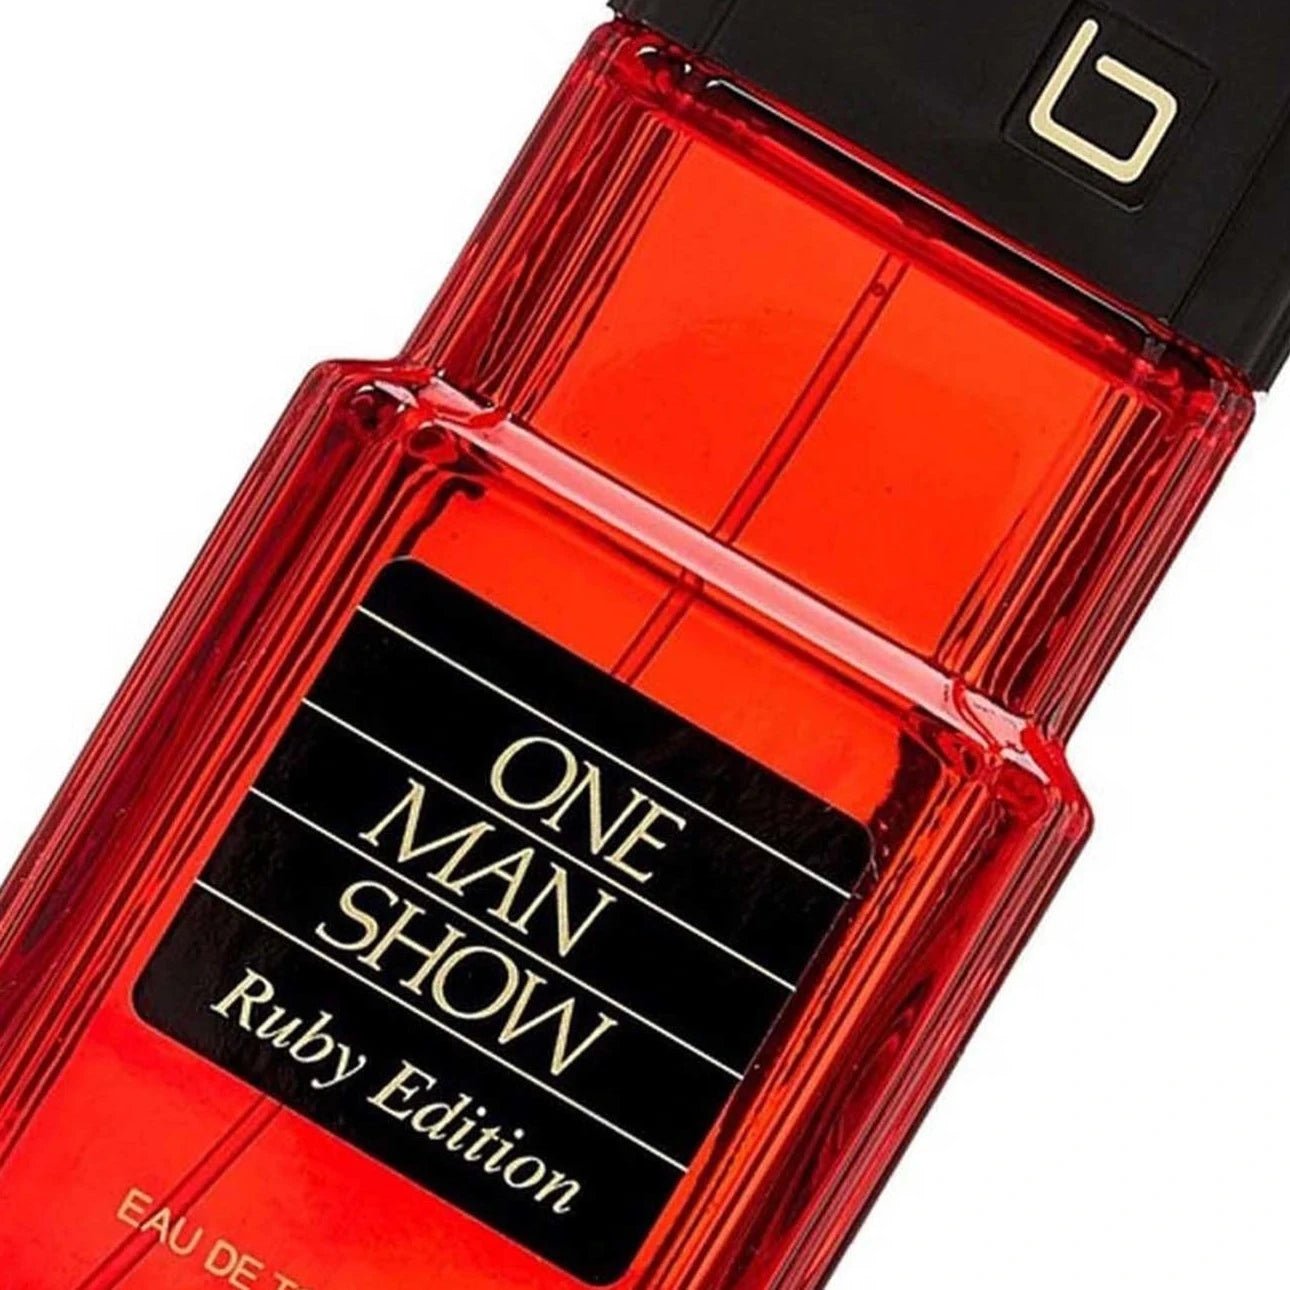 Jacques Bogart One Man Show Ruby Edition Body Spray | My Perfume Shop Australia